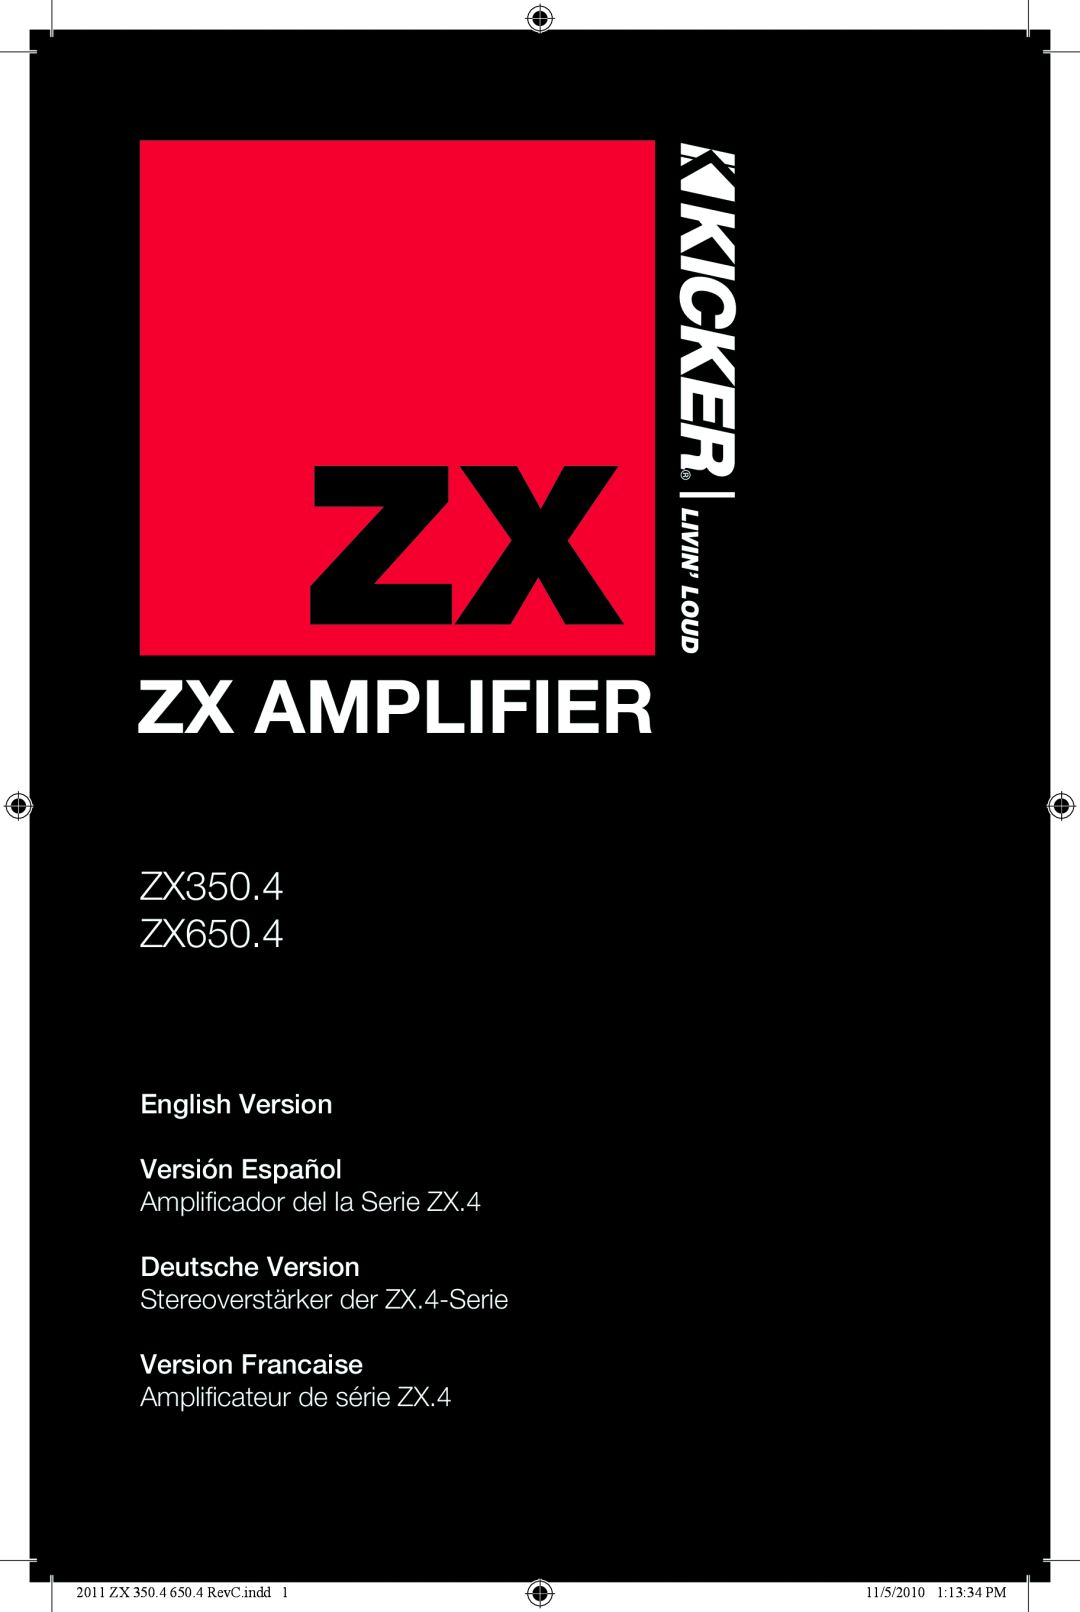 Kicker manual Zx Amplifier, ZX350.4 ZX650.4, English Version Versión Español, Amplificateur de série ZX.4, Livin’ Loud 